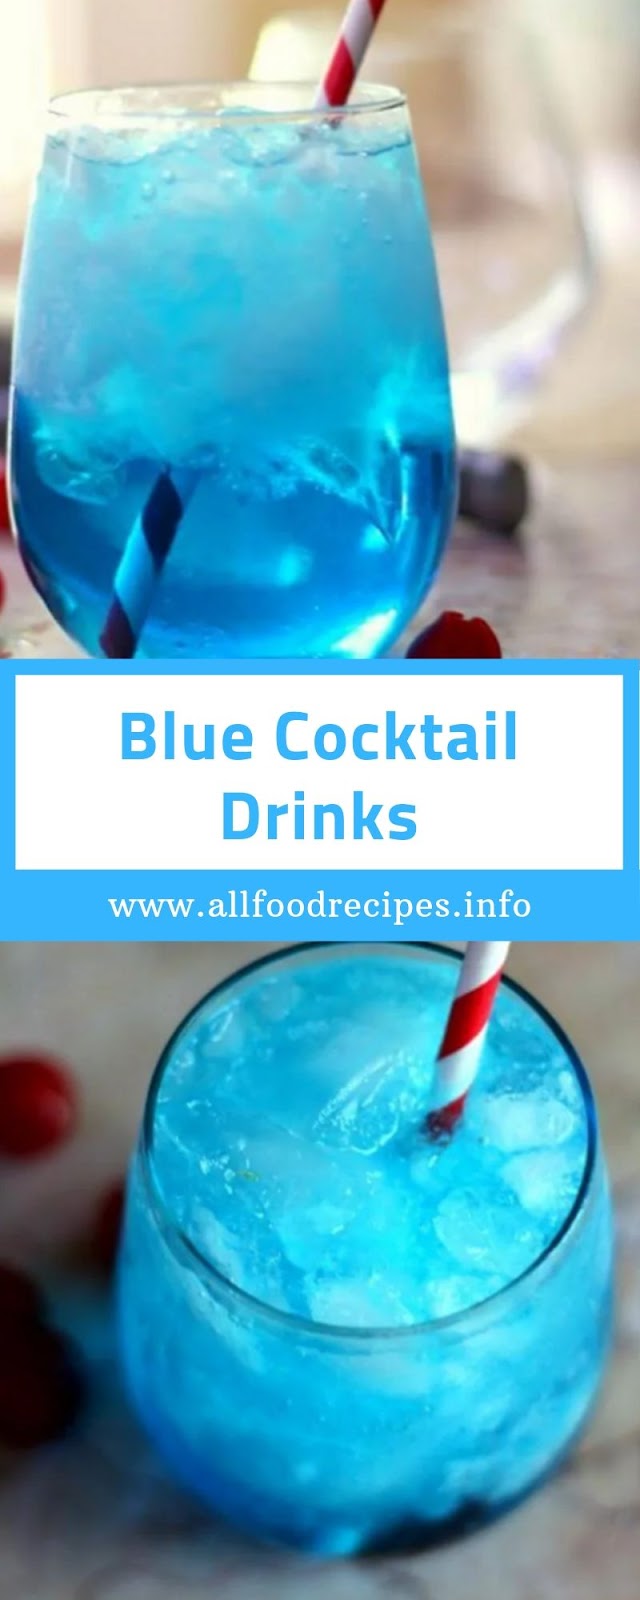 Blue Cocktail Drinks